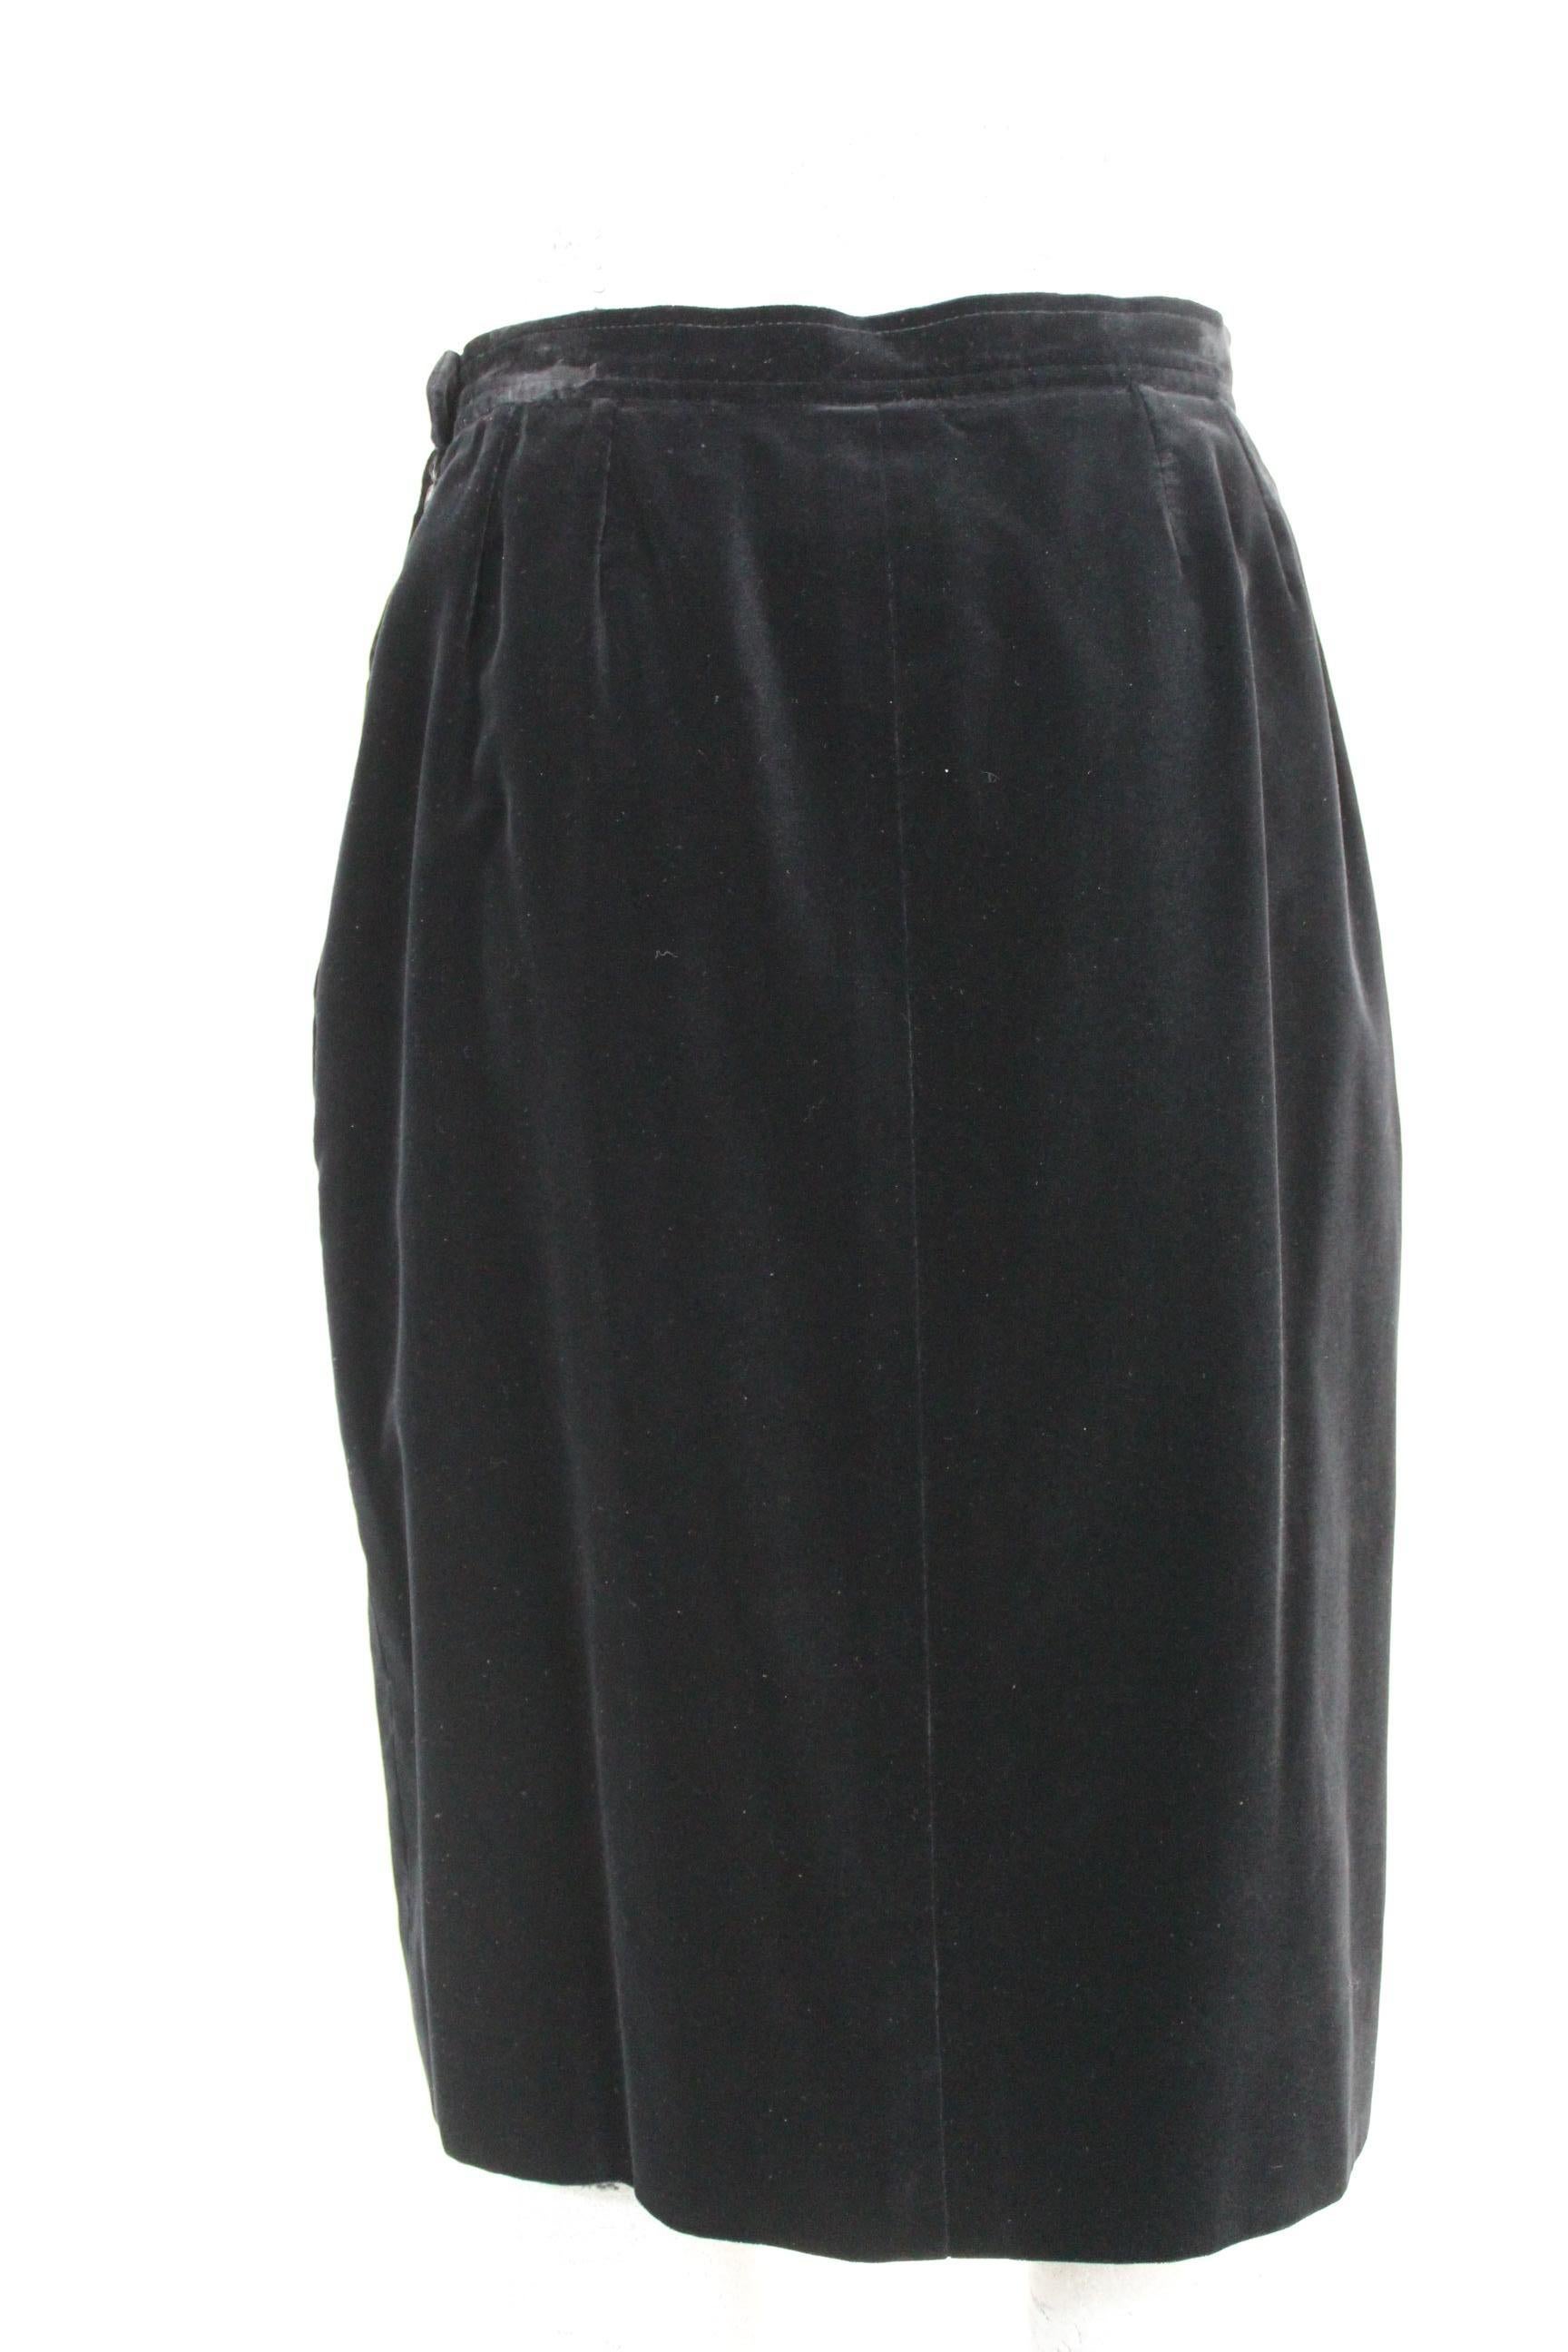 Yves Saint Laurent Black Velvet Evening Skirt In Excellent Condition For Sale In Brindisi, Bt